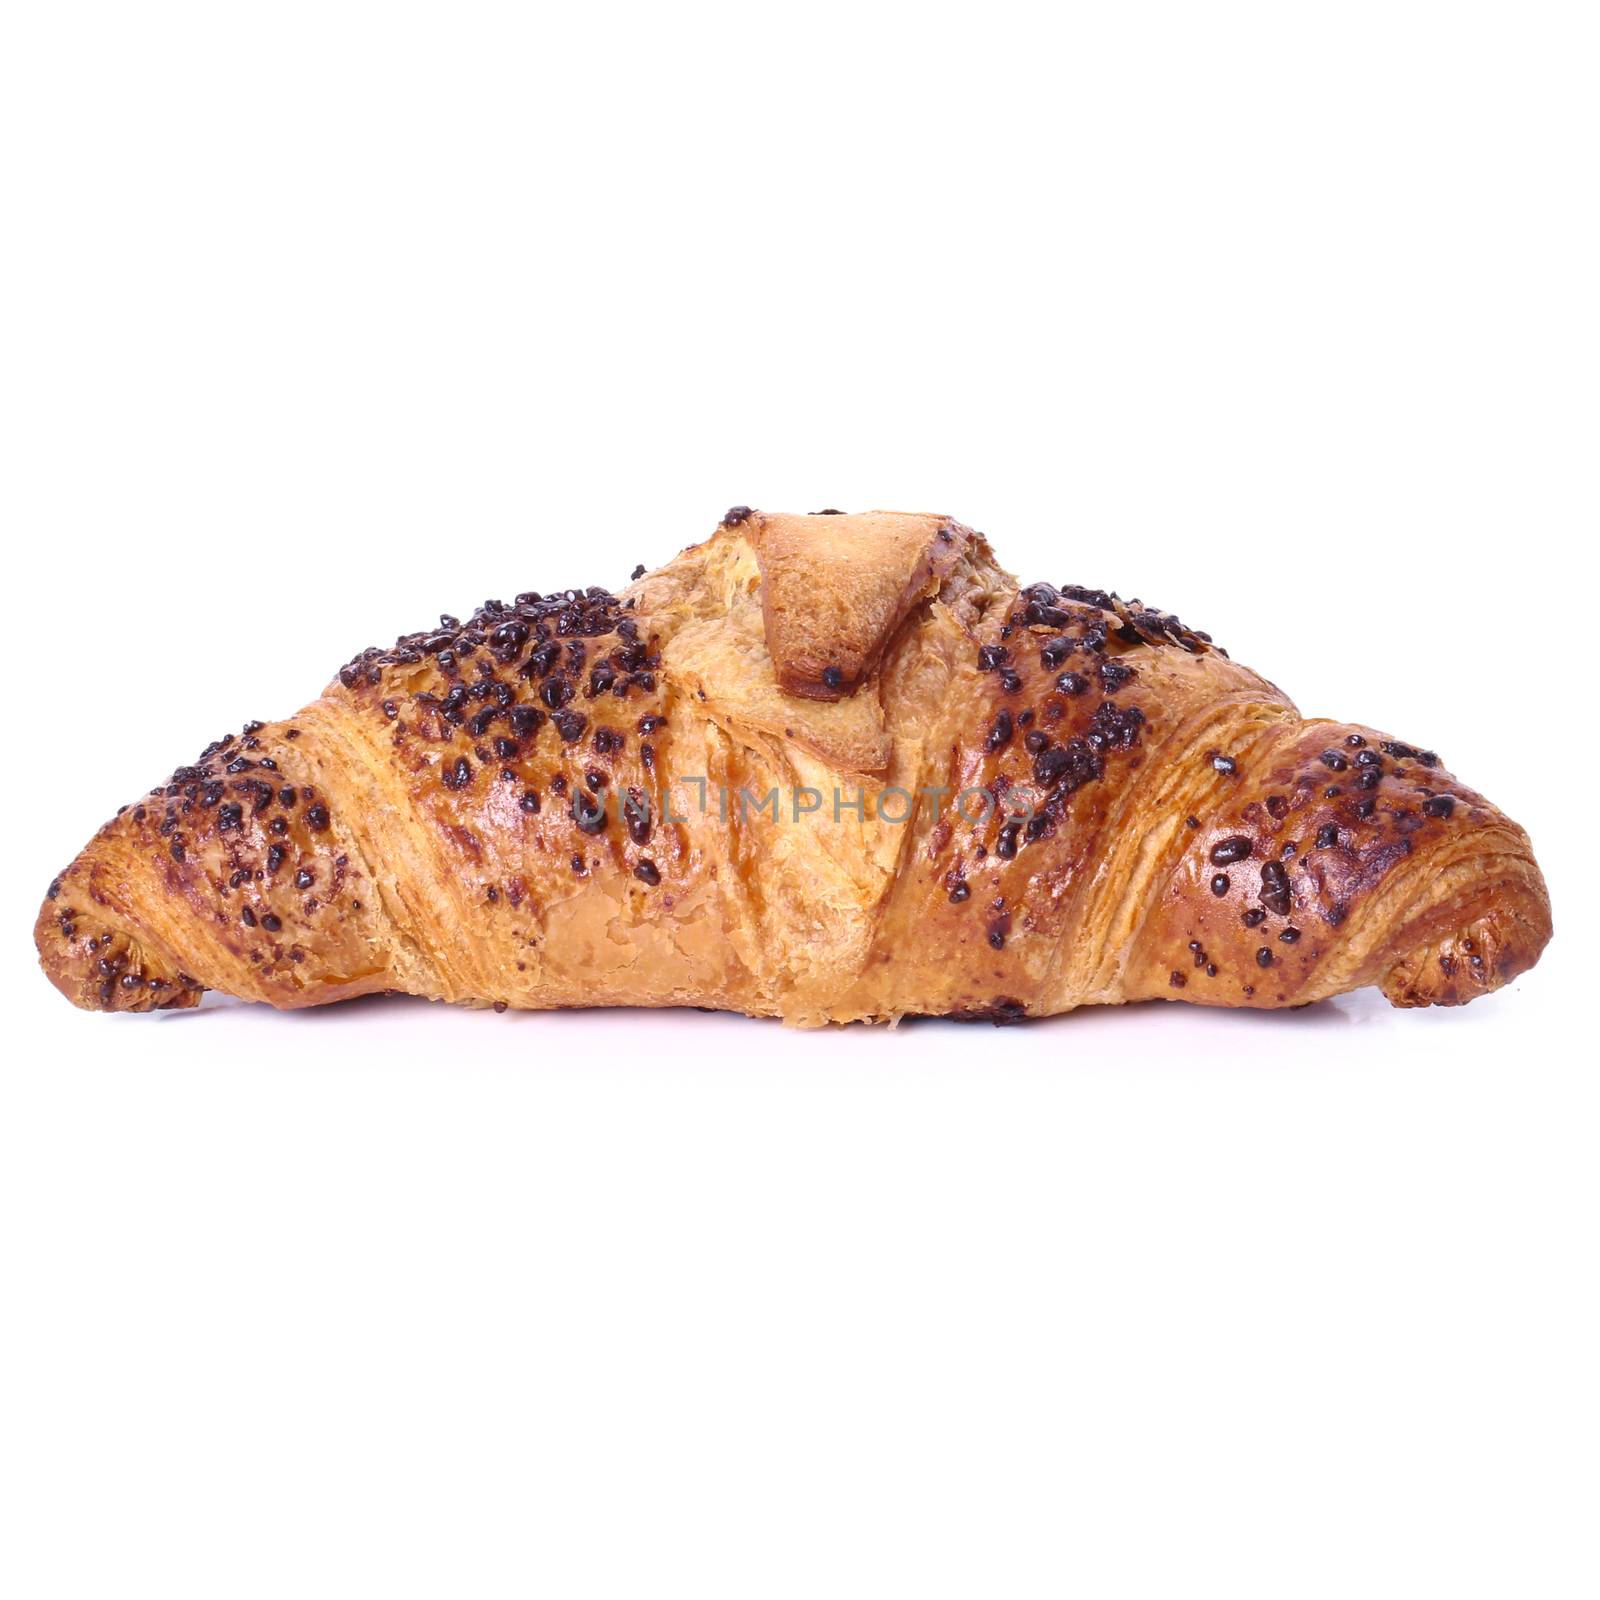 Croissant on the table by rufatjumali